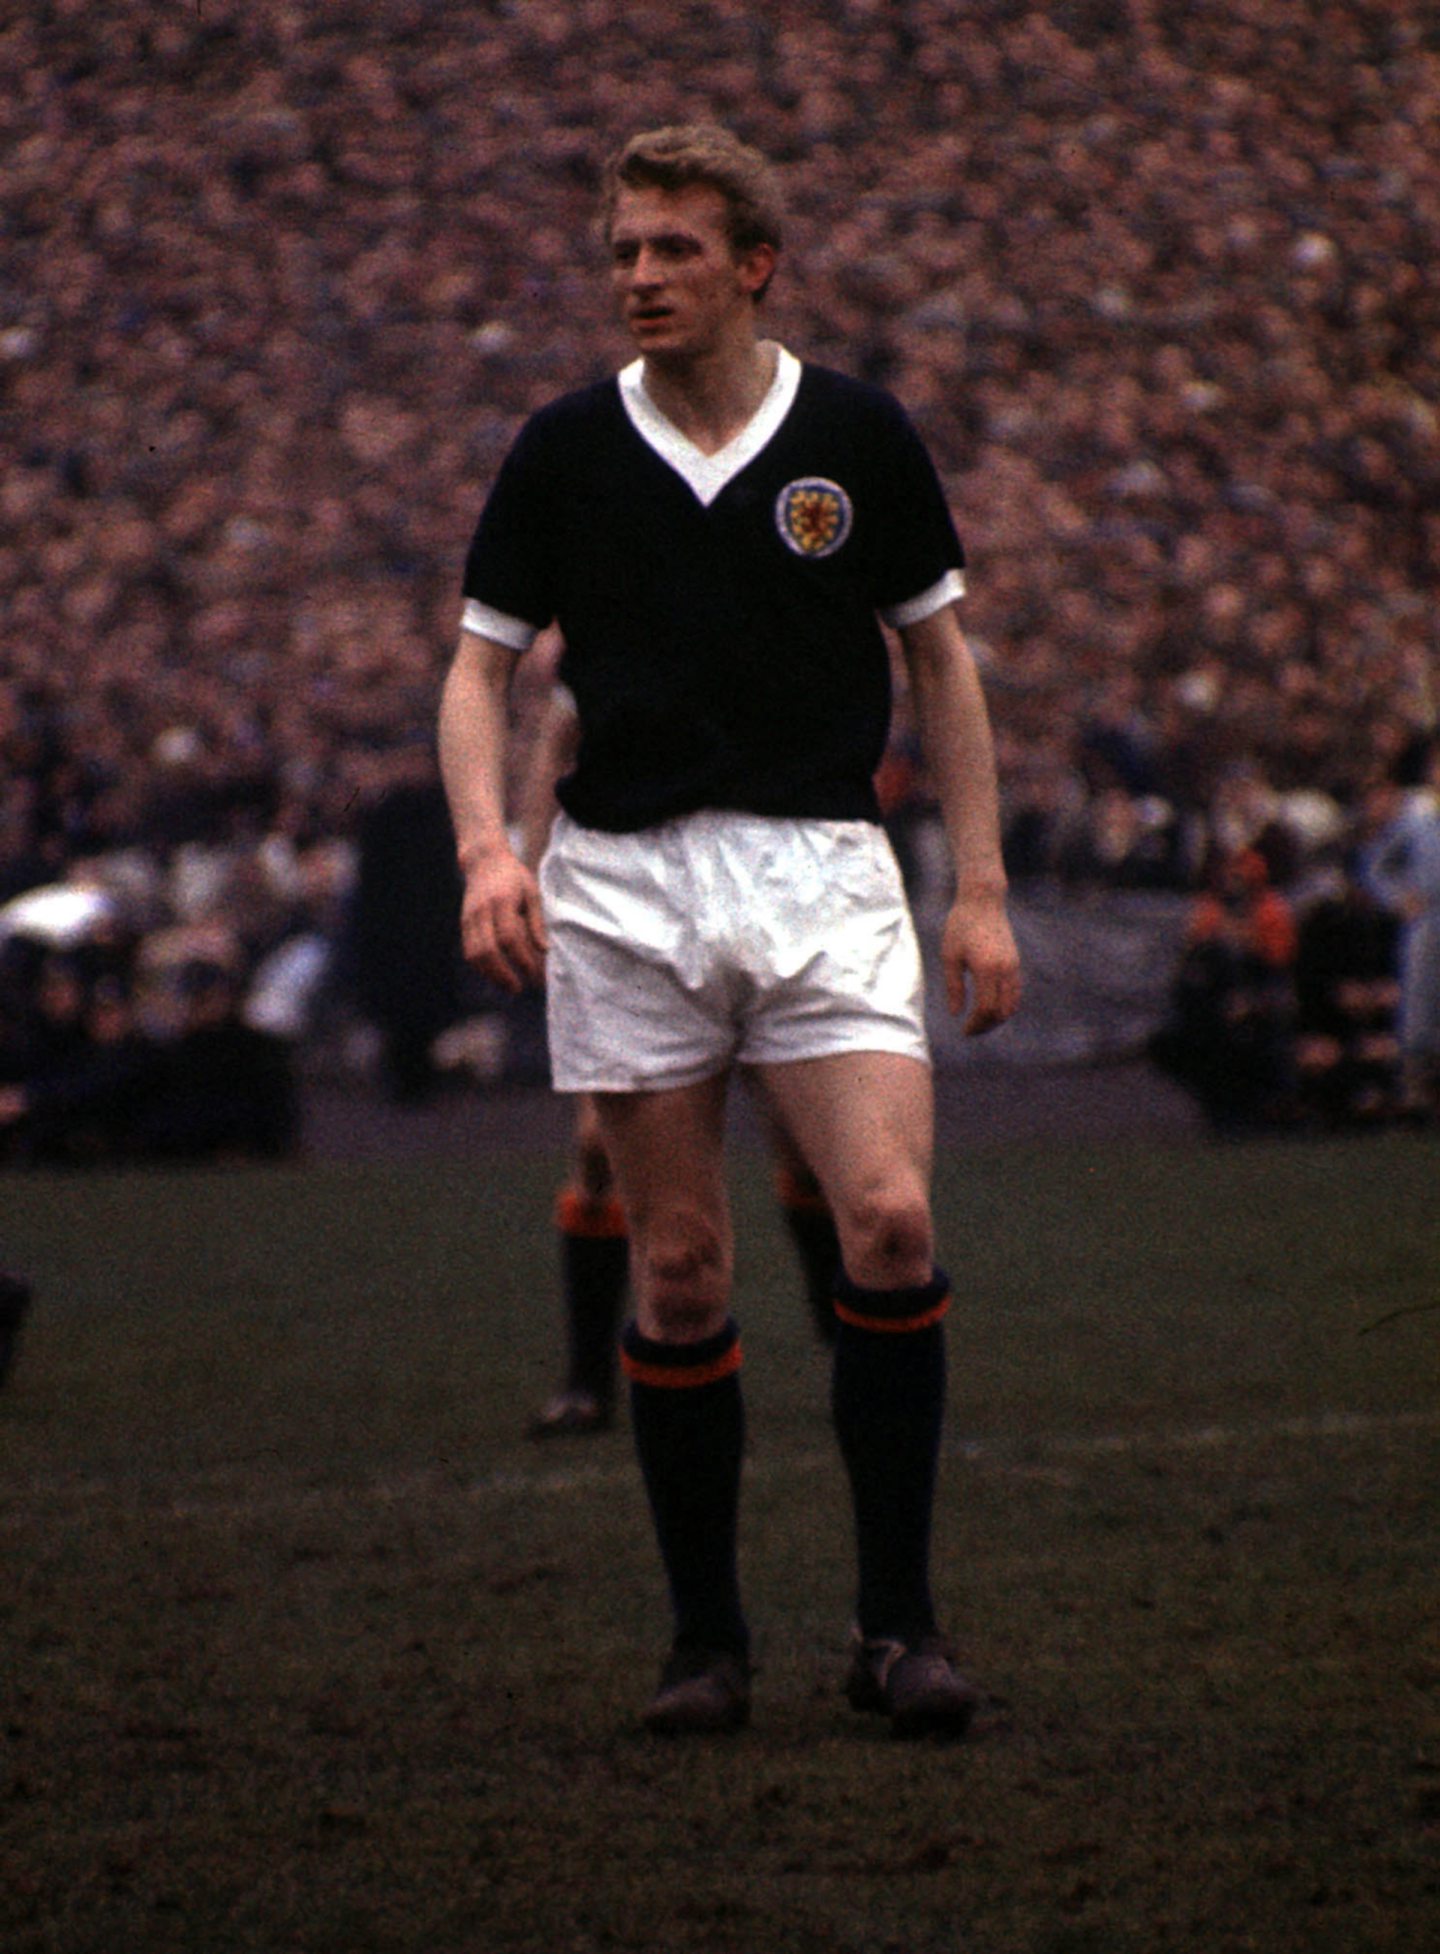 Denis Law scored 30 goals for Scotland between 1958-1974.